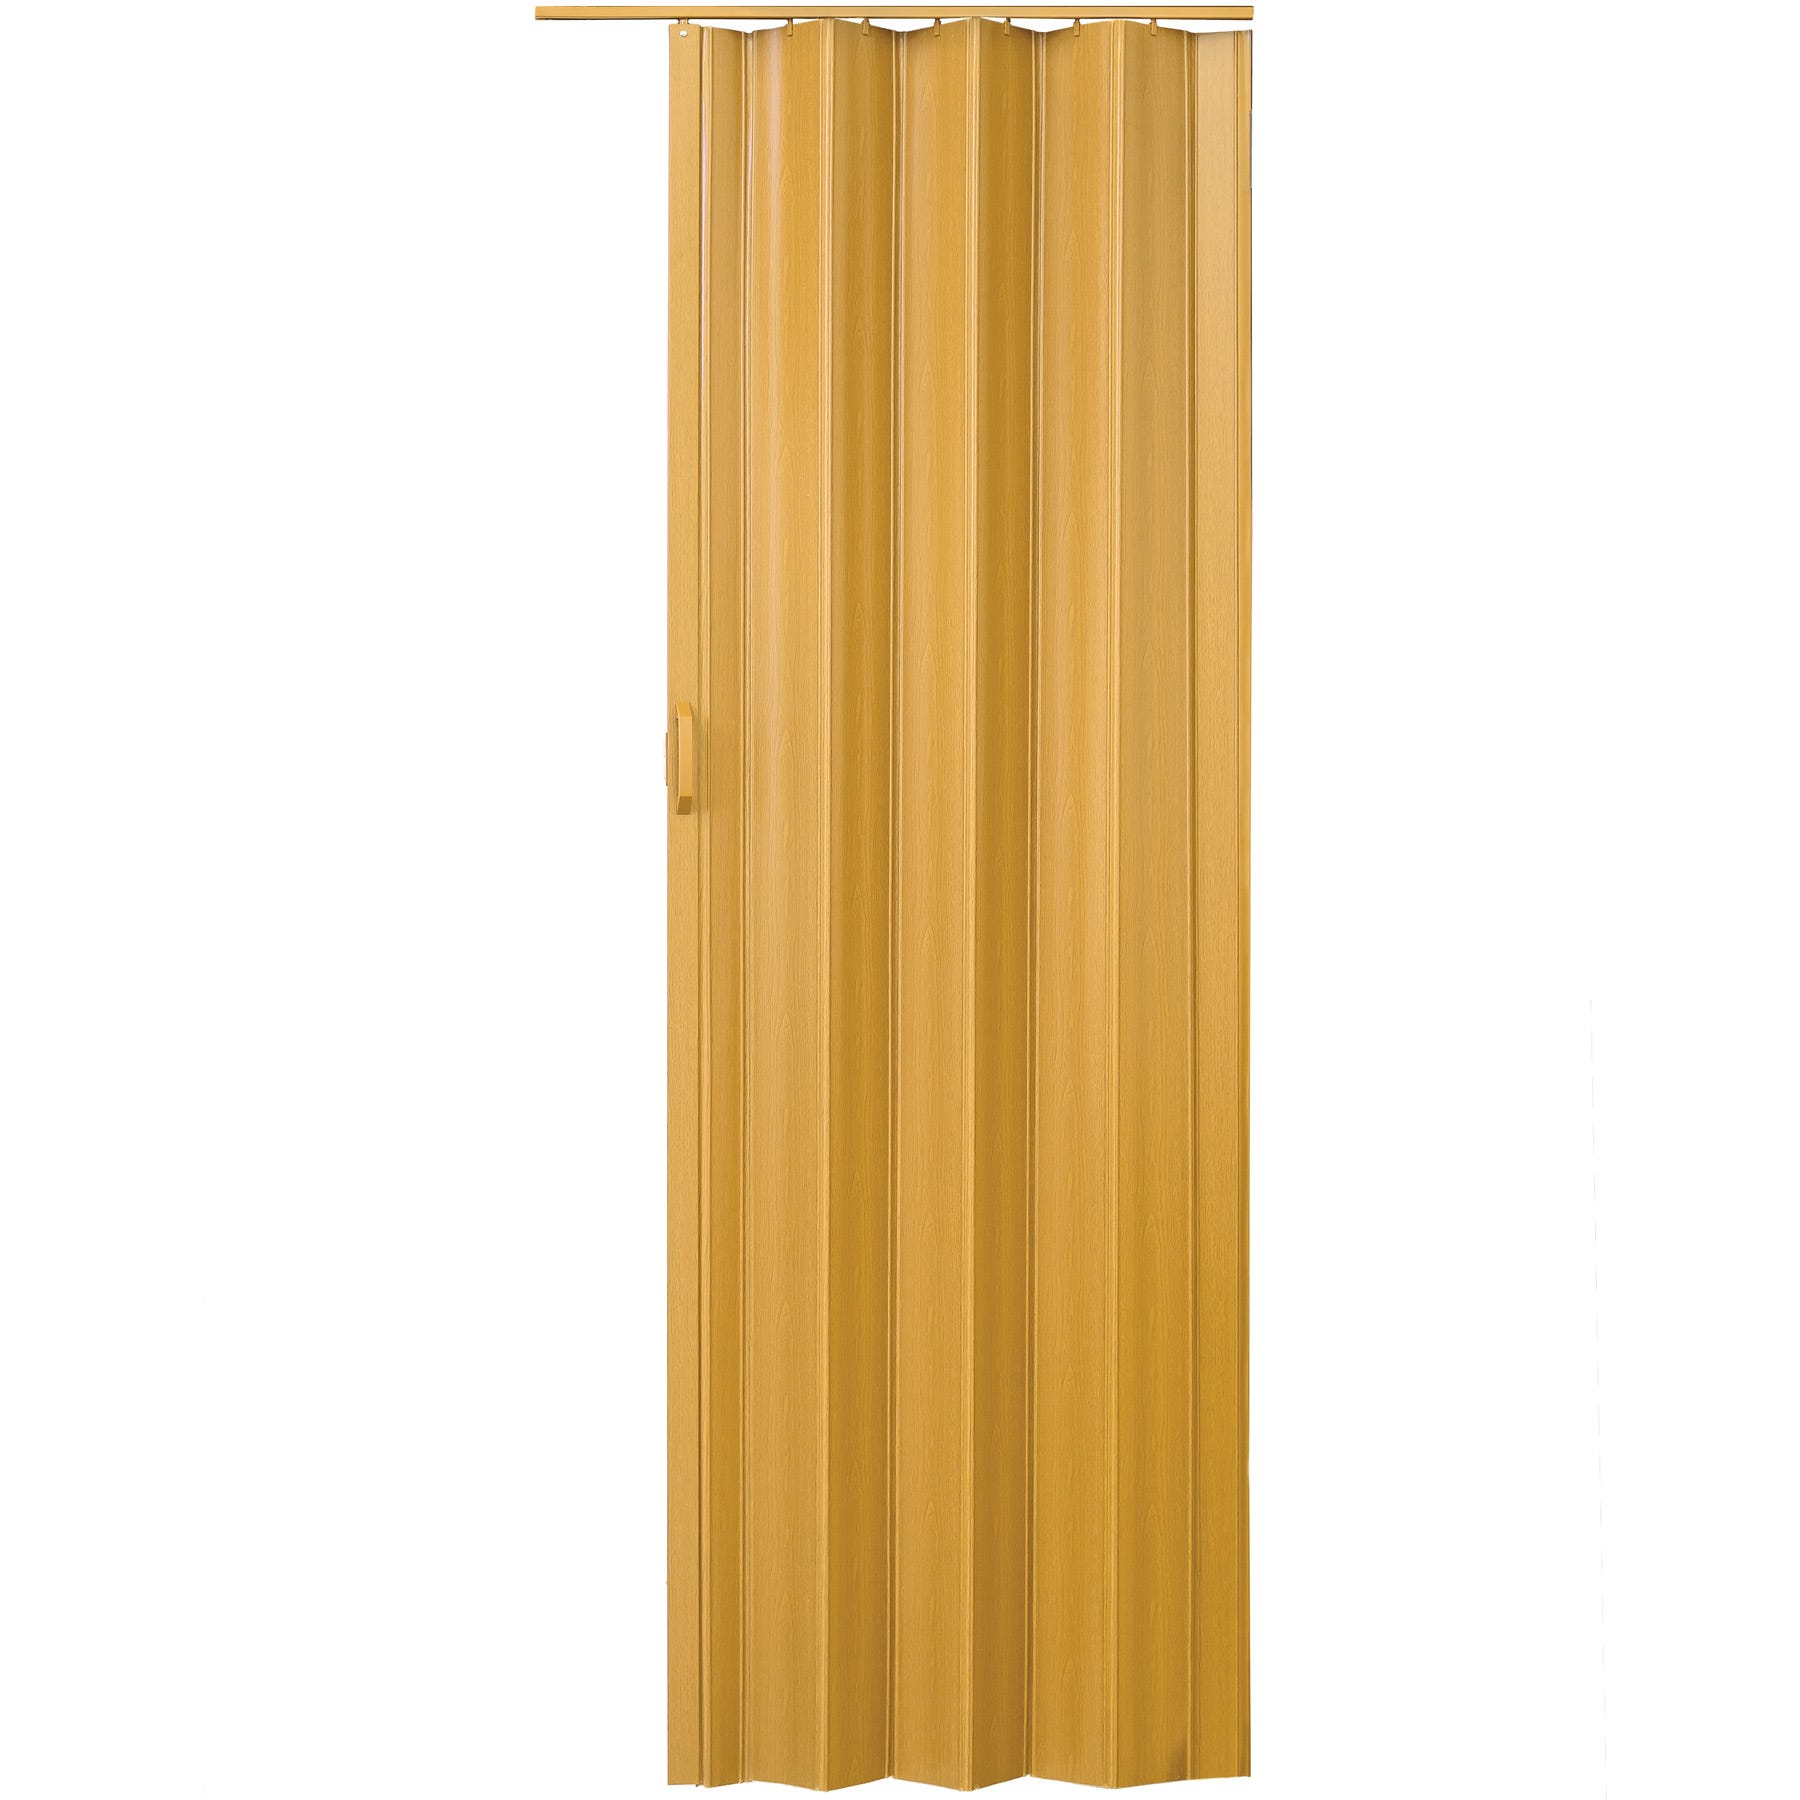 Porte pliante reductible accordèon hêtre bois en pvc coulissante